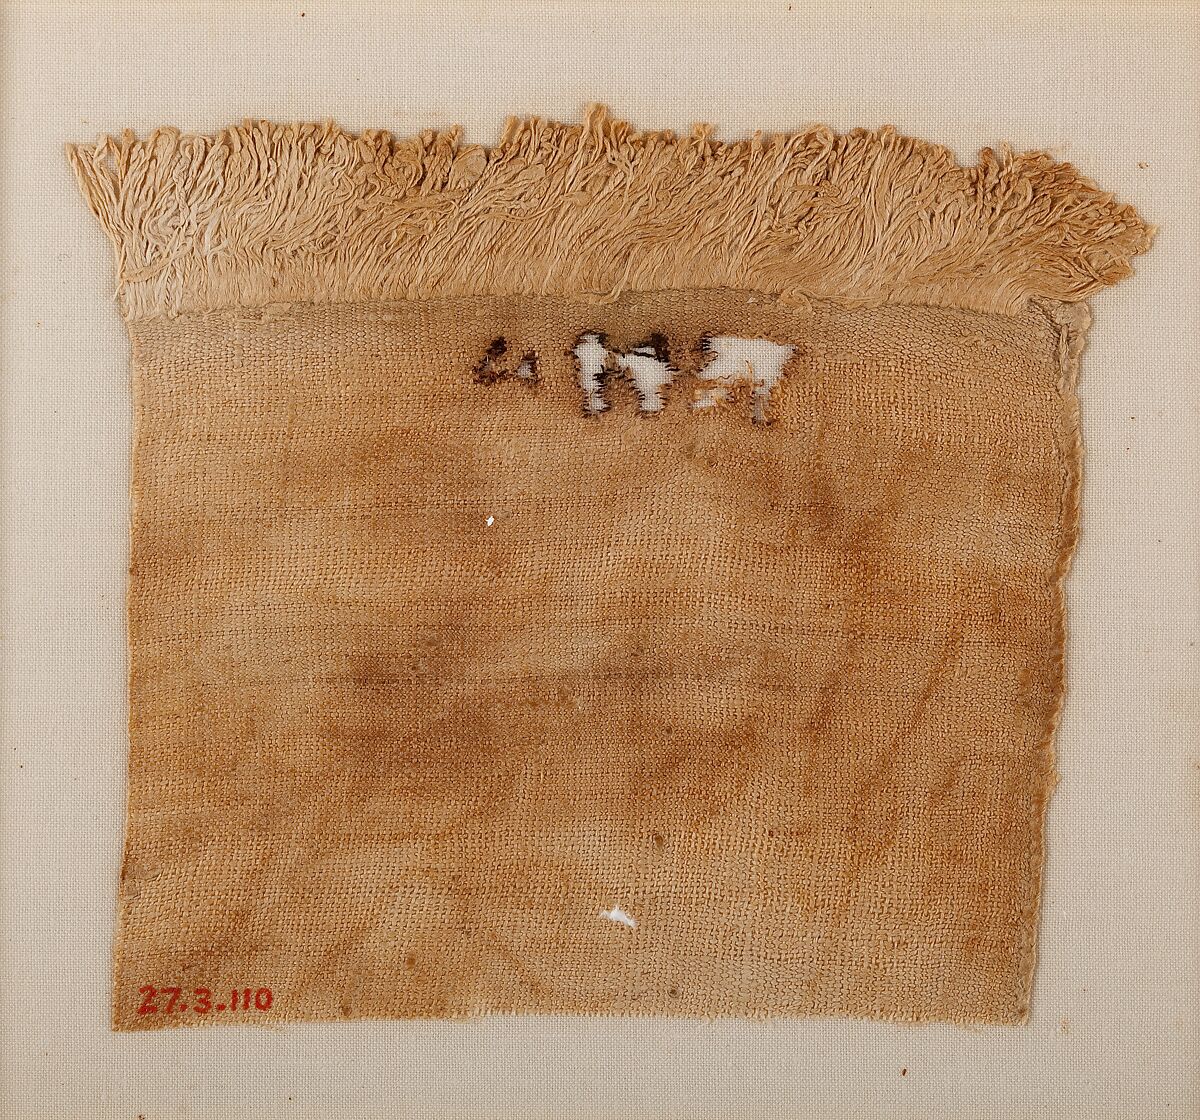 Linen mark (Type XIII), Linen 